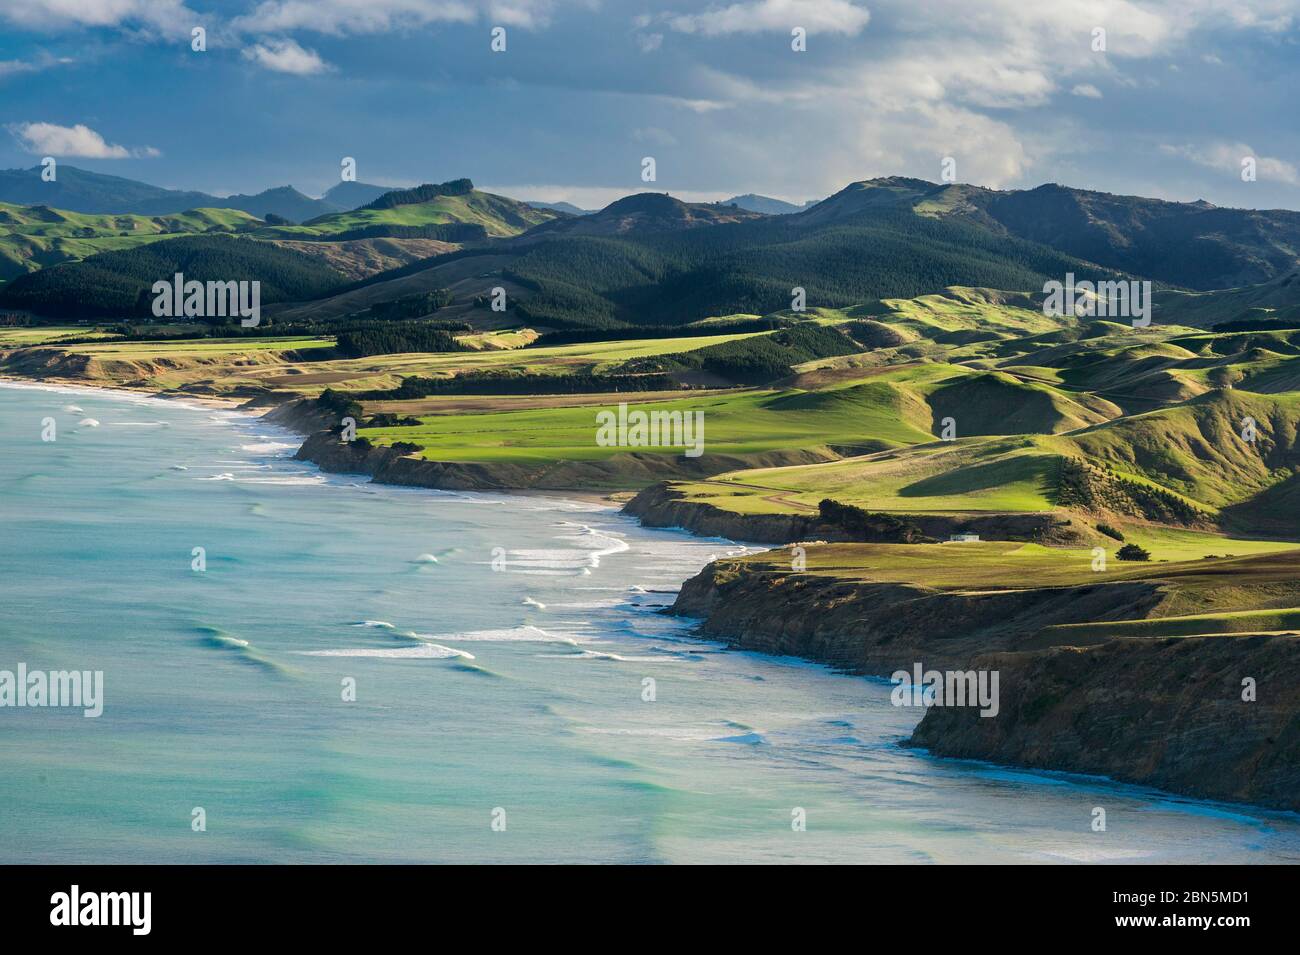 Castlepoint coastline, mountain landscape with green hills and pasture land, Masterton, Wellington, New Zealand Stock Photo